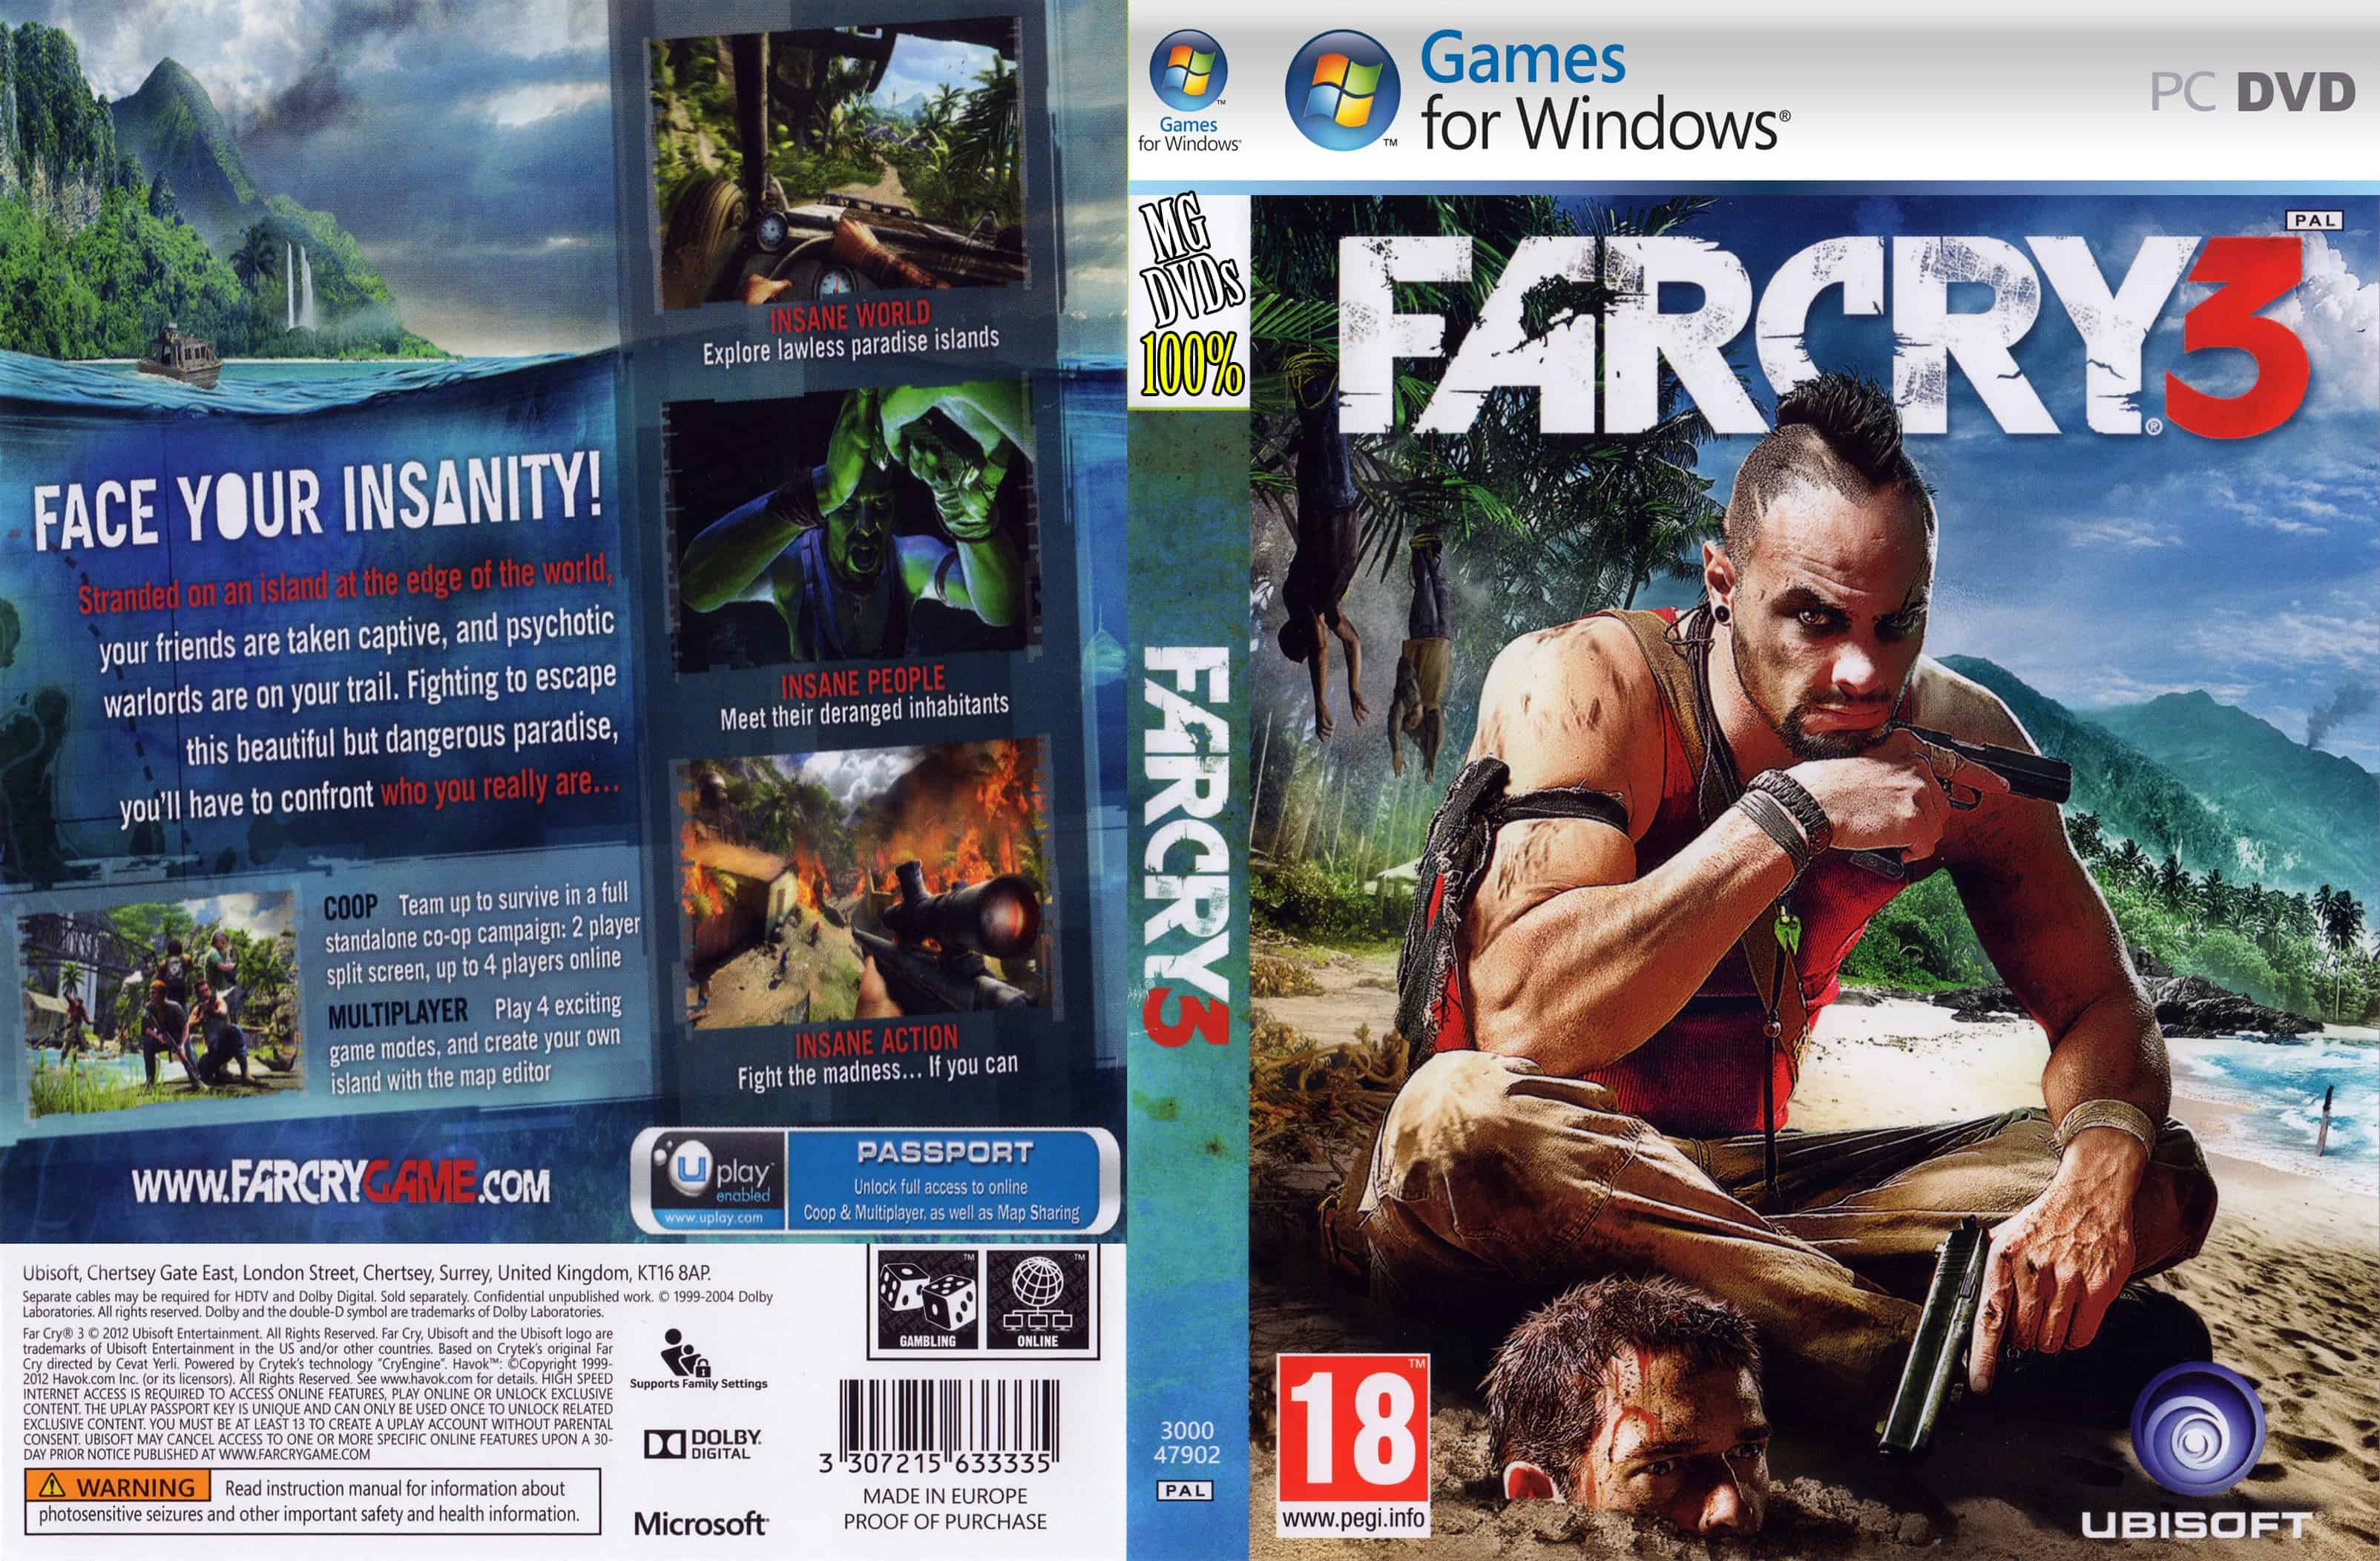 Win far. Игровой диск far Cry 1. DVD обложка антология far Cry. Far Cry 2 пиратский диск. FARCRY диск PC.